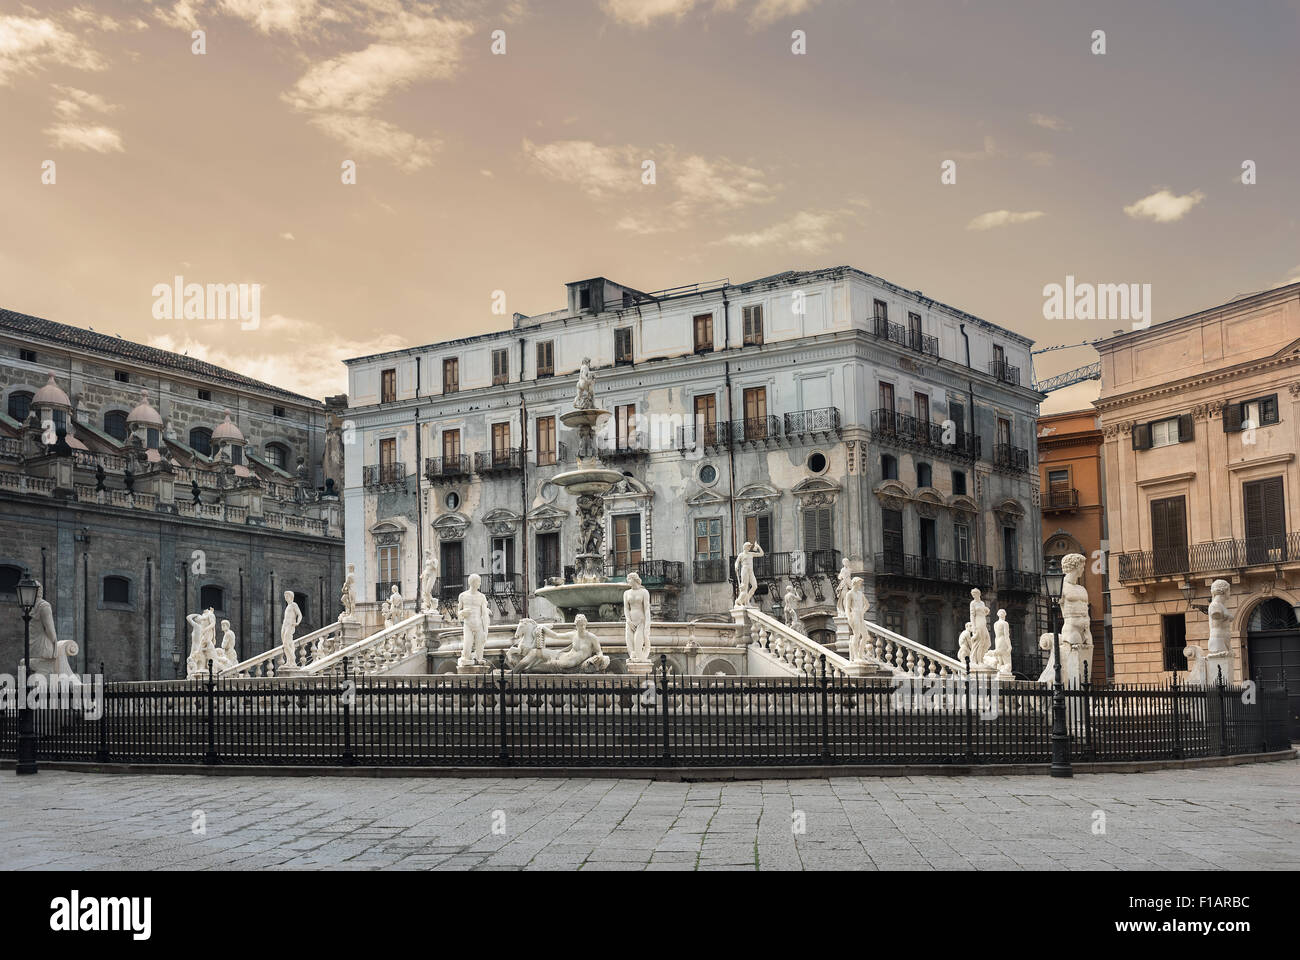 Piazza Pretoria mit Brunnen mit Skulpturen Fontana Pretoria. Palermo, Sizilien, Italien Stockfoto